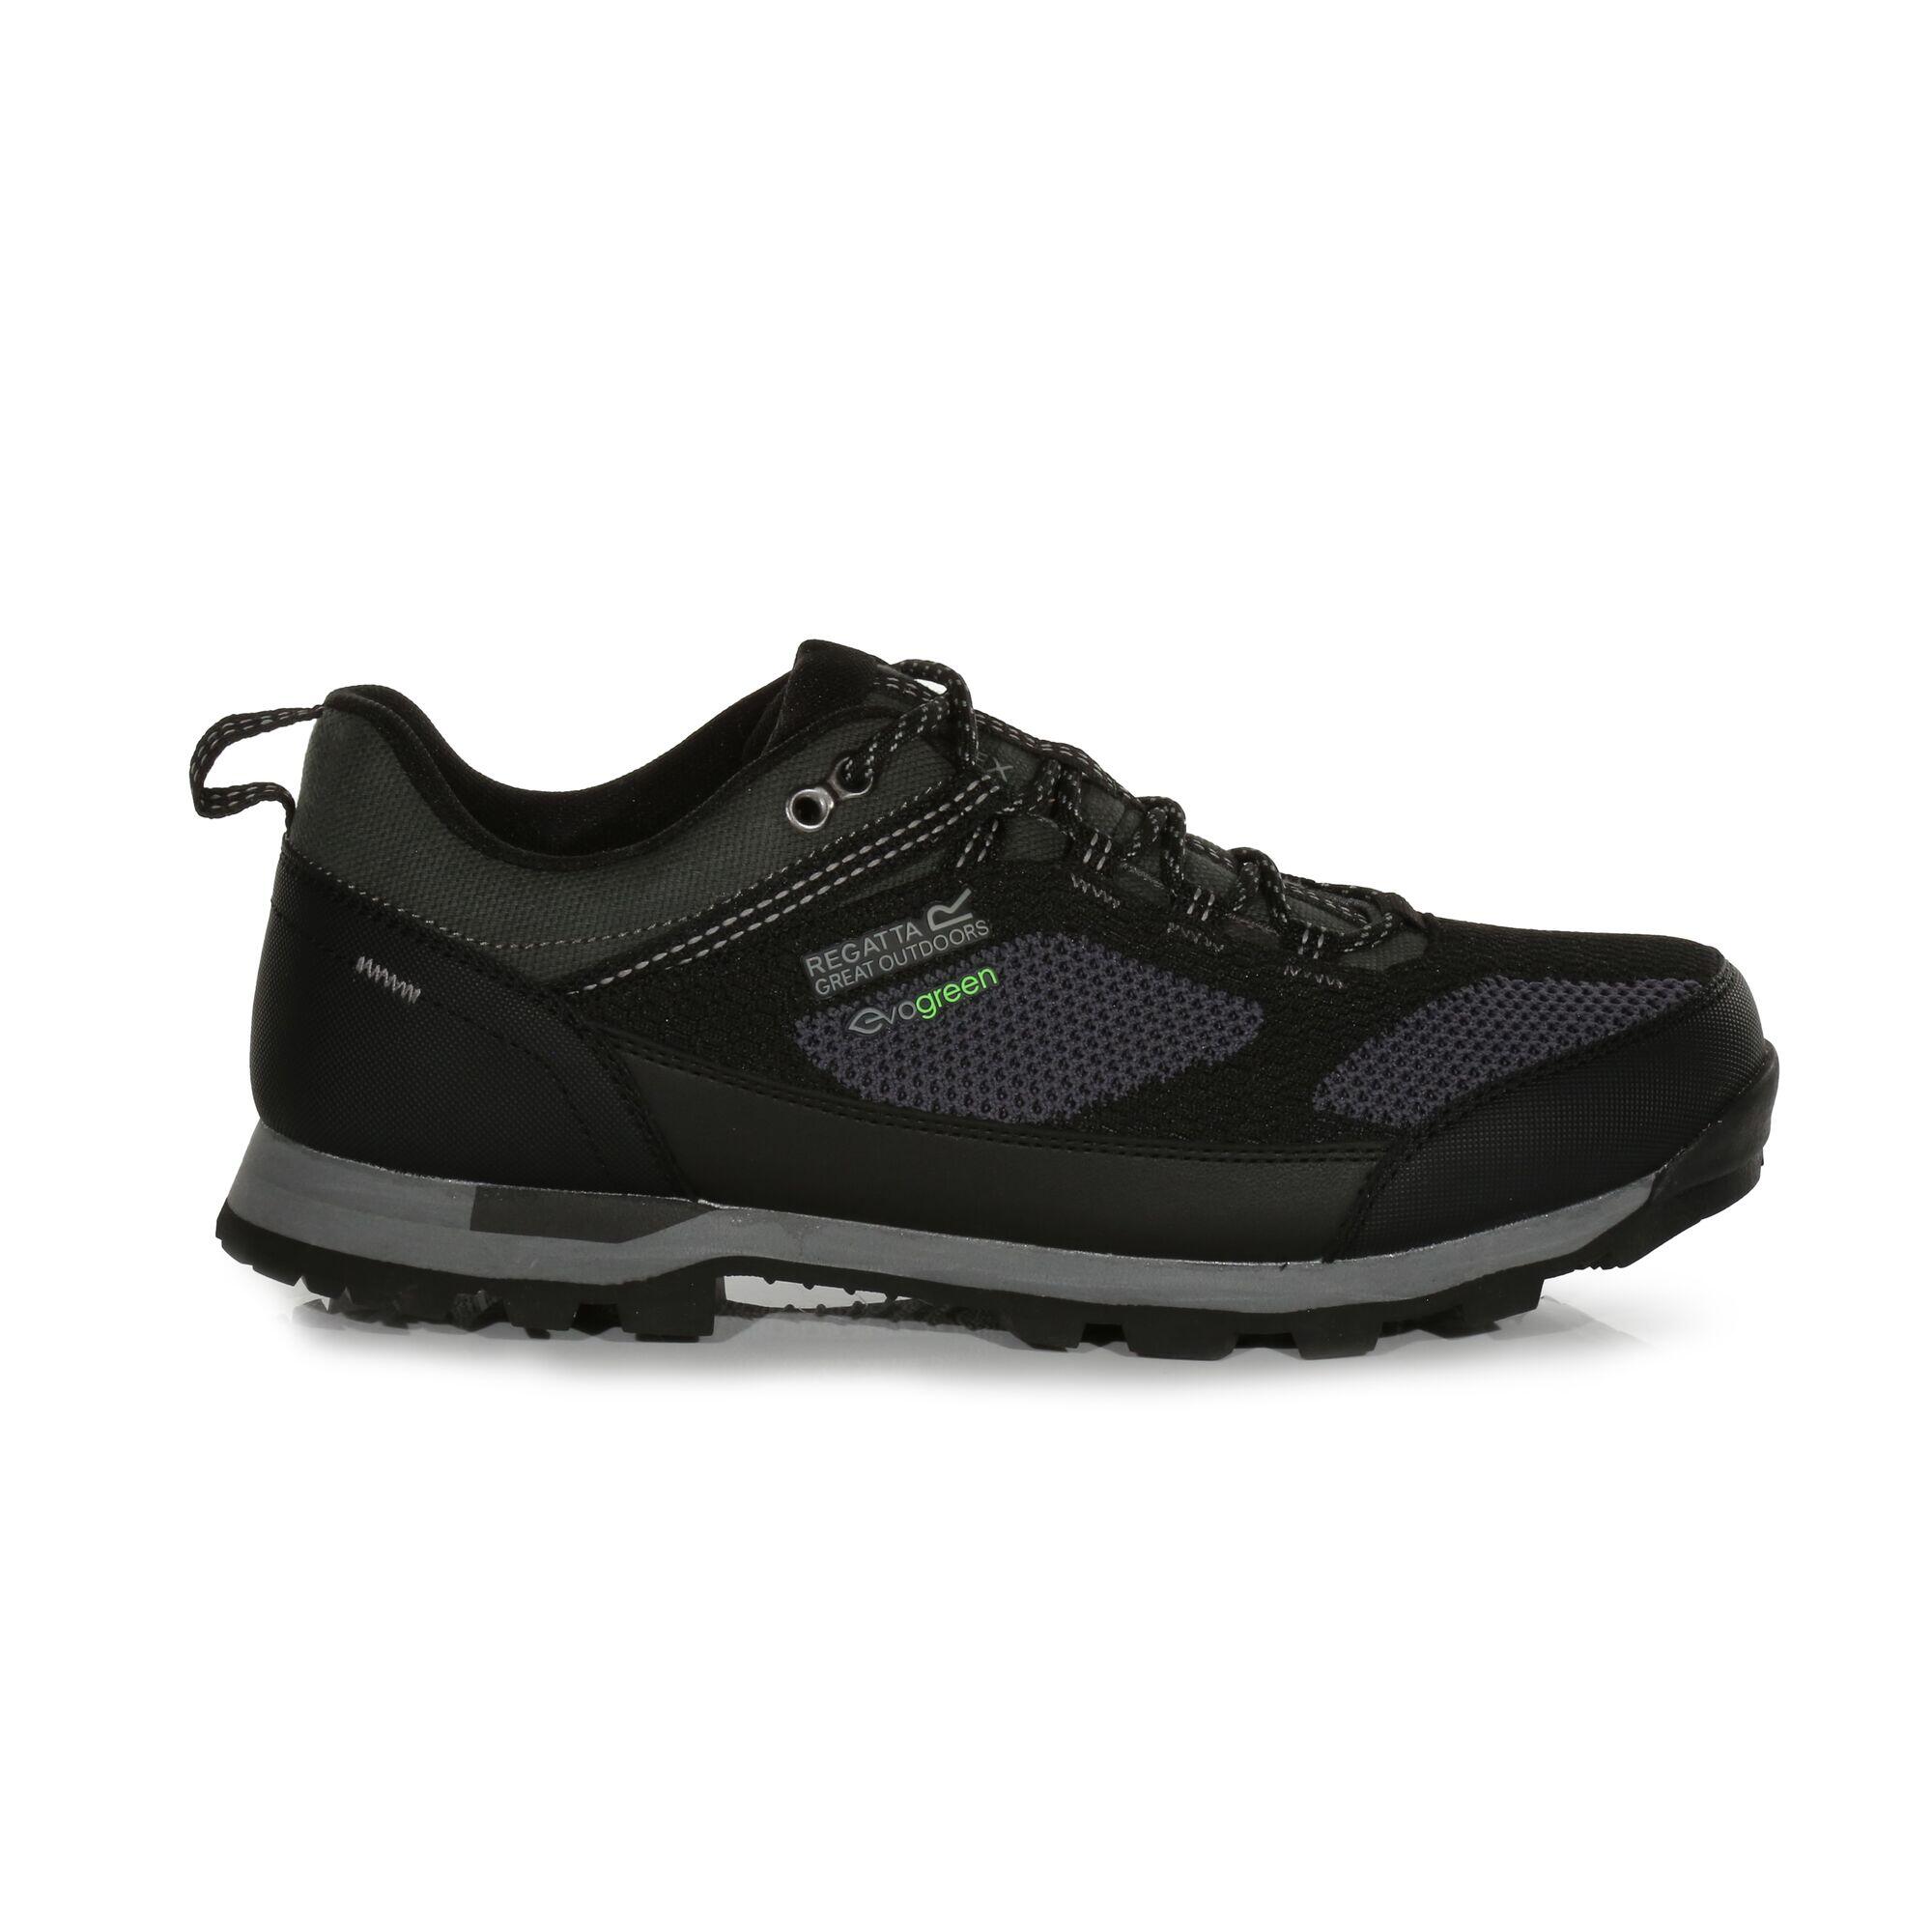 Men's Blackthorn Evo Low Walking Shoes 2/5